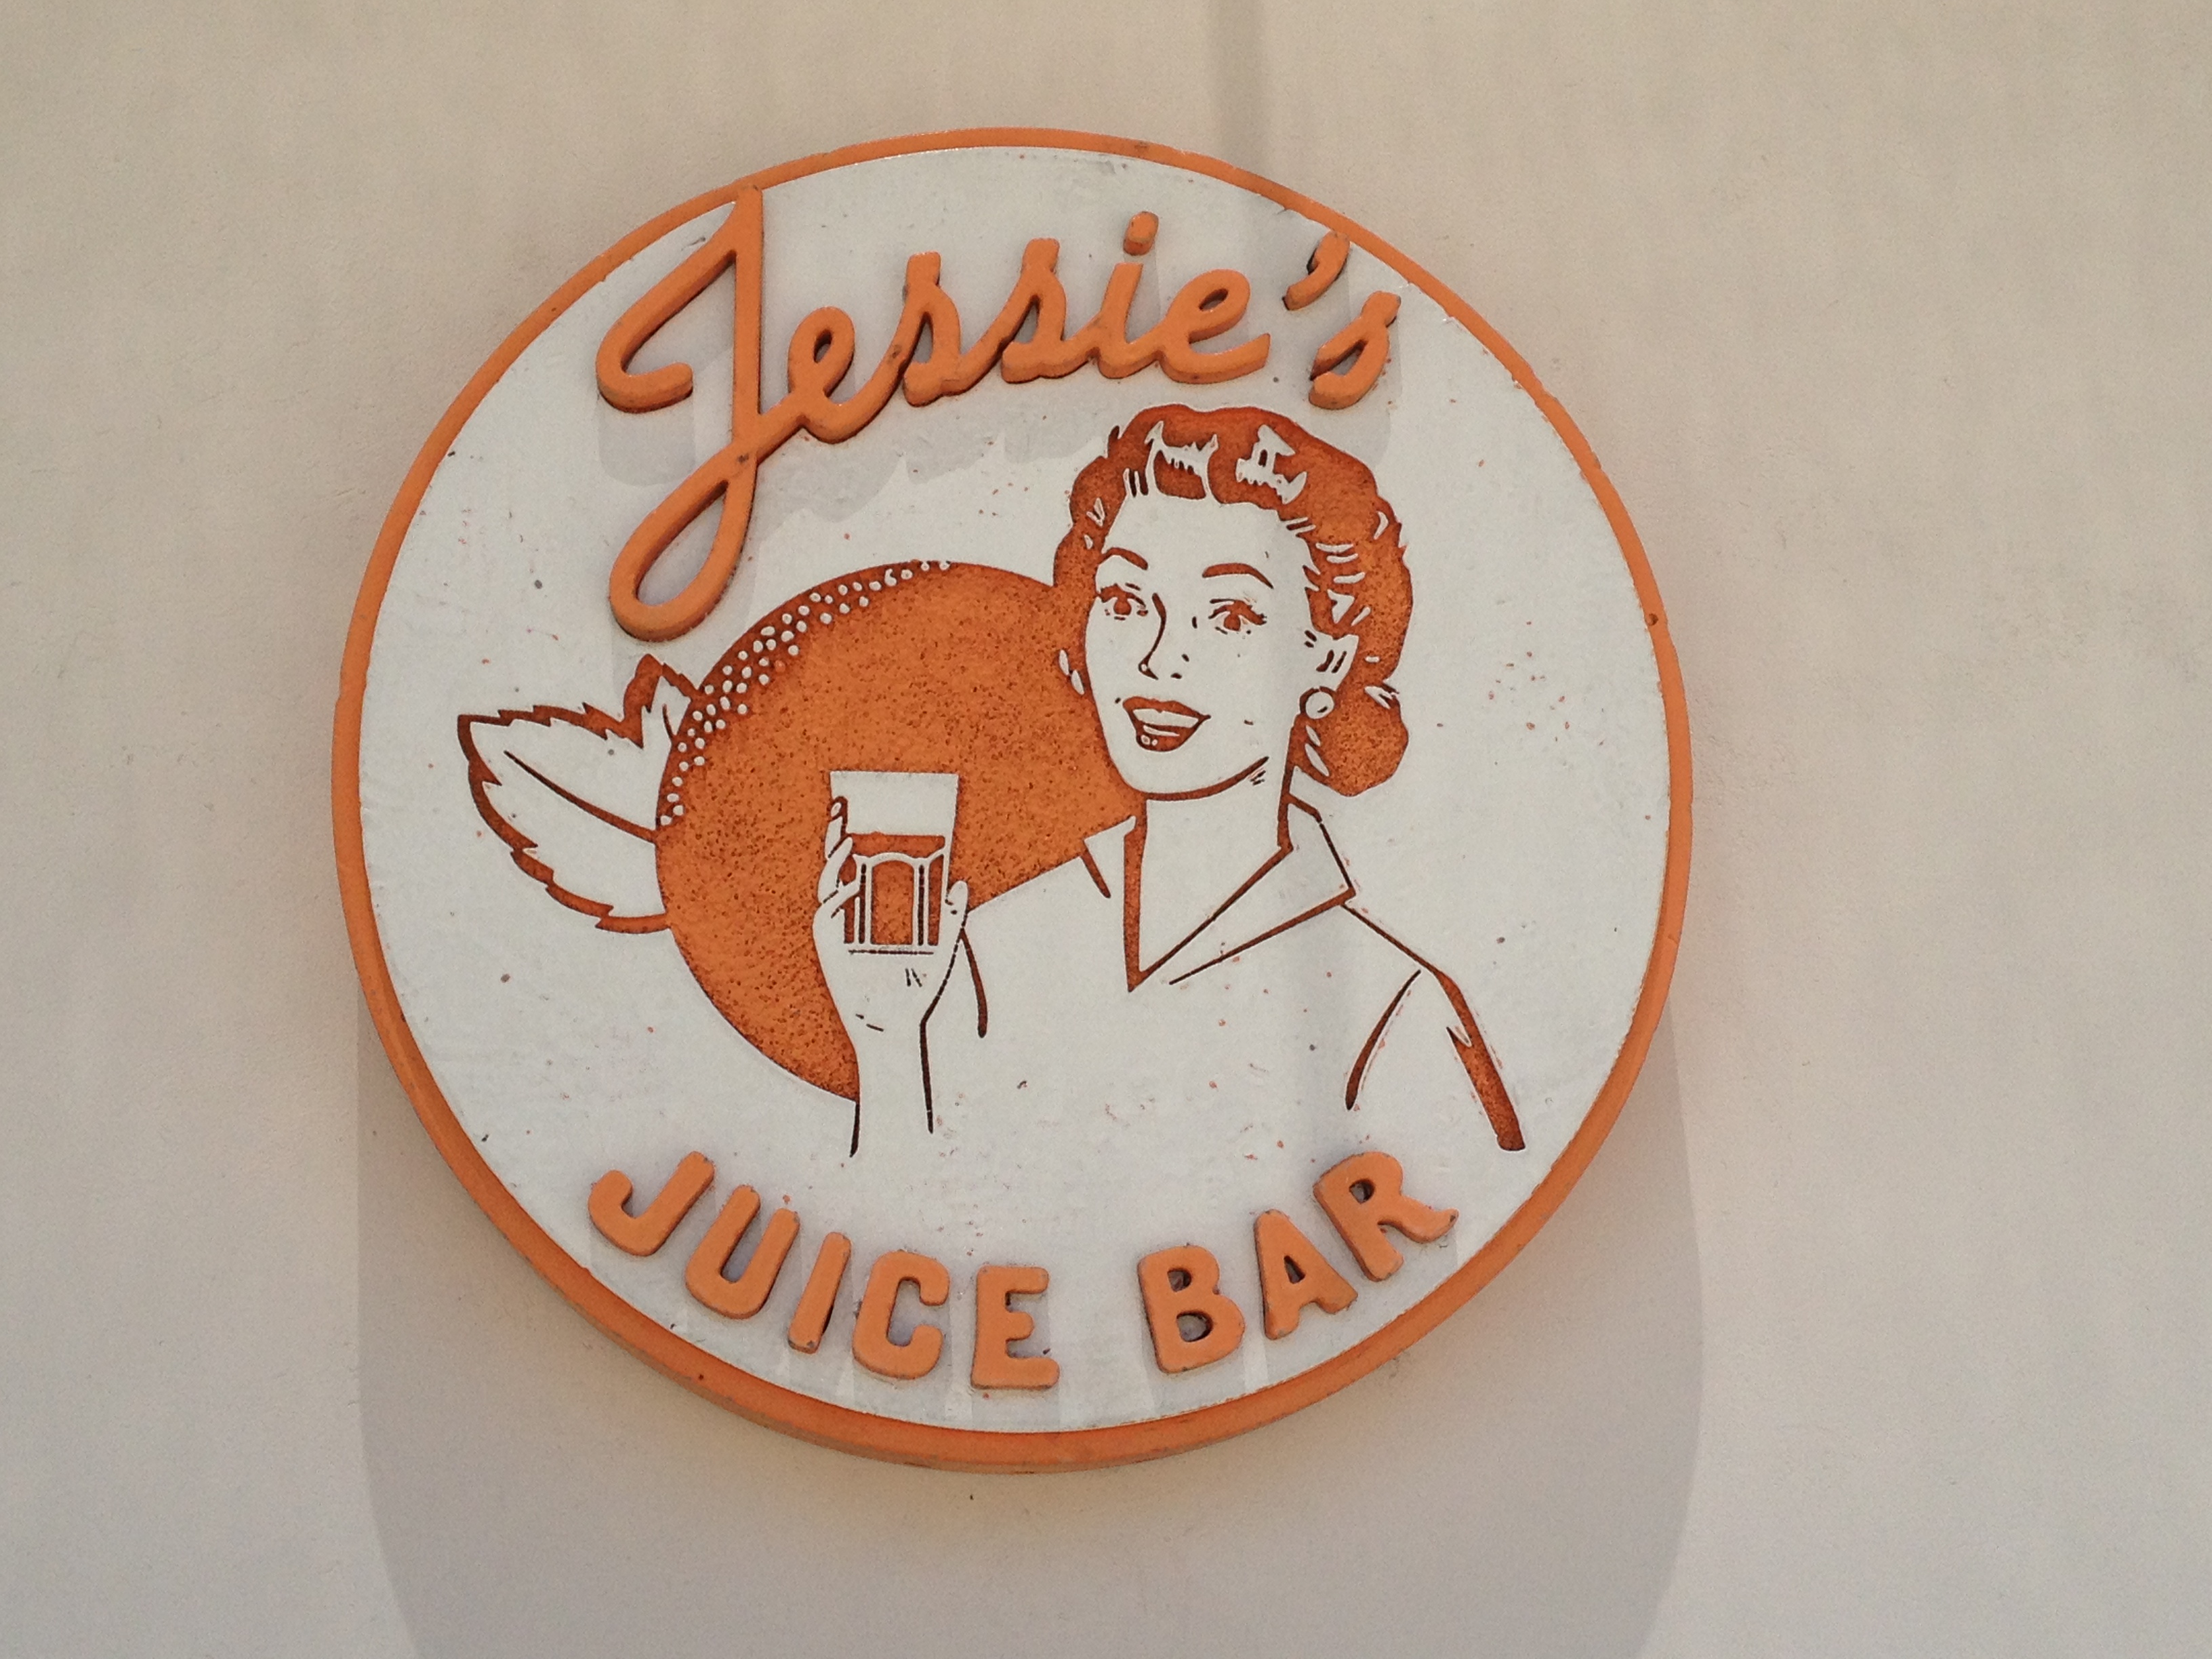 Jessie Juice Bar